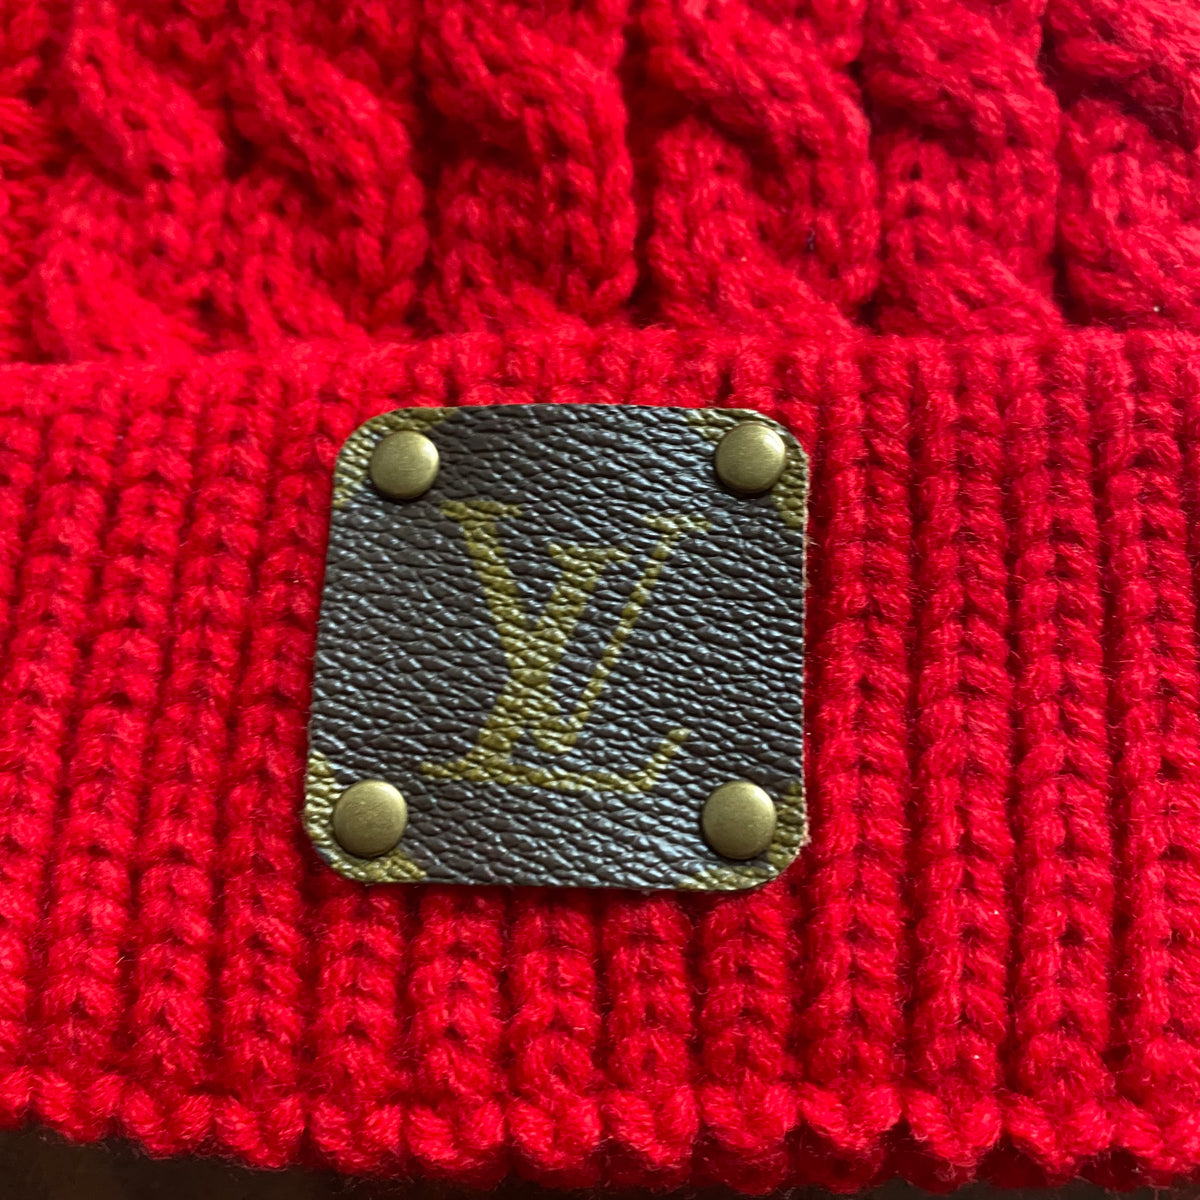 Louis Vuitton Red 'LV Hipster' Beanie